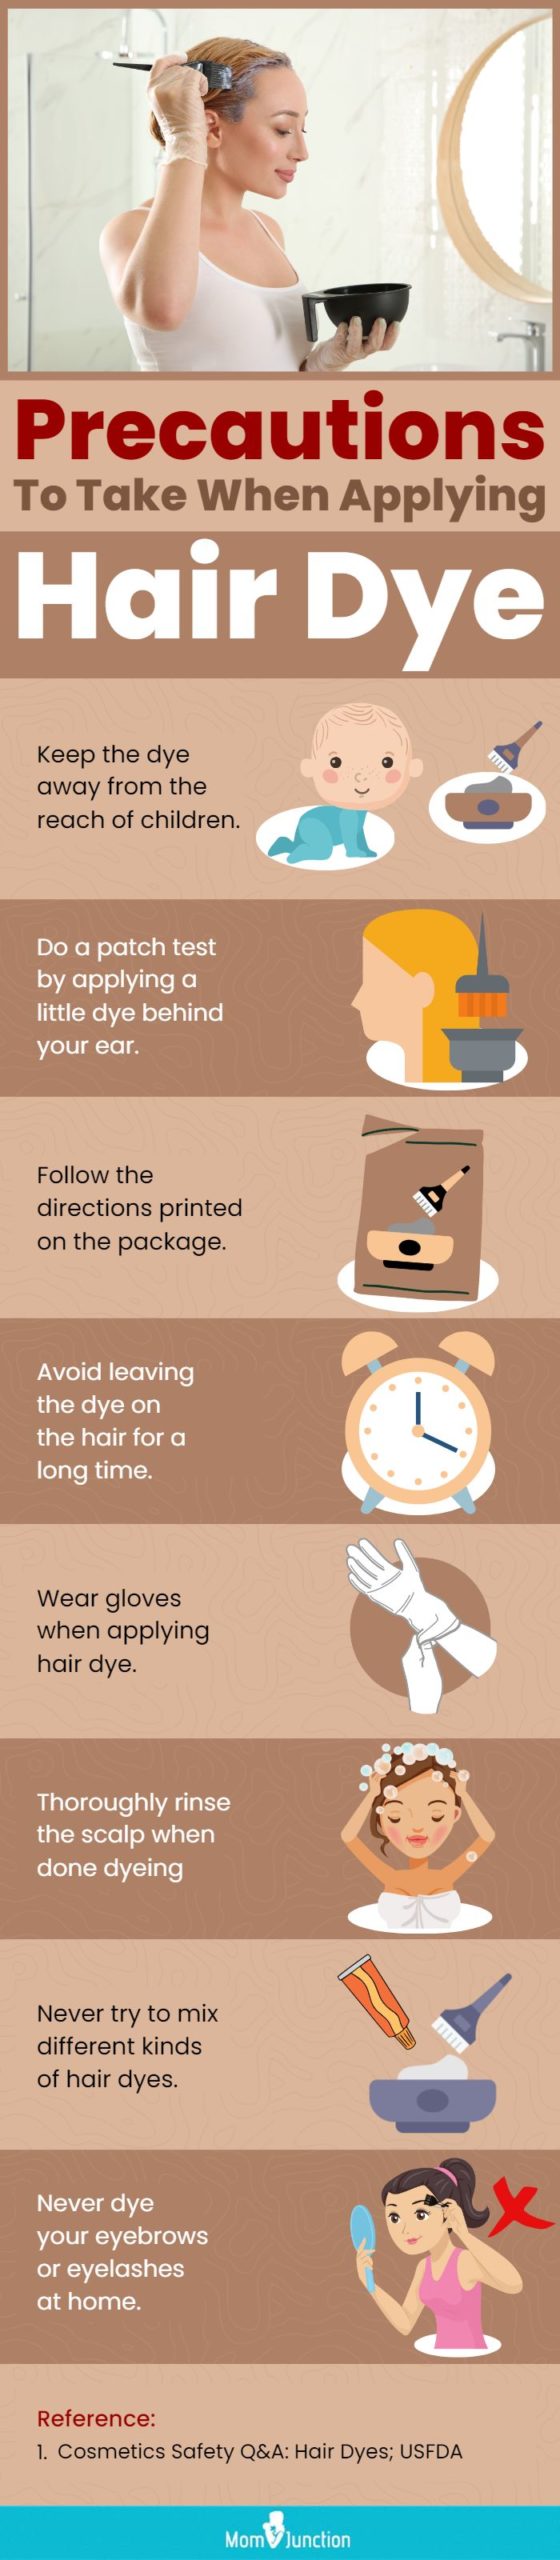 Precautions To Take When Applying Hair Dye